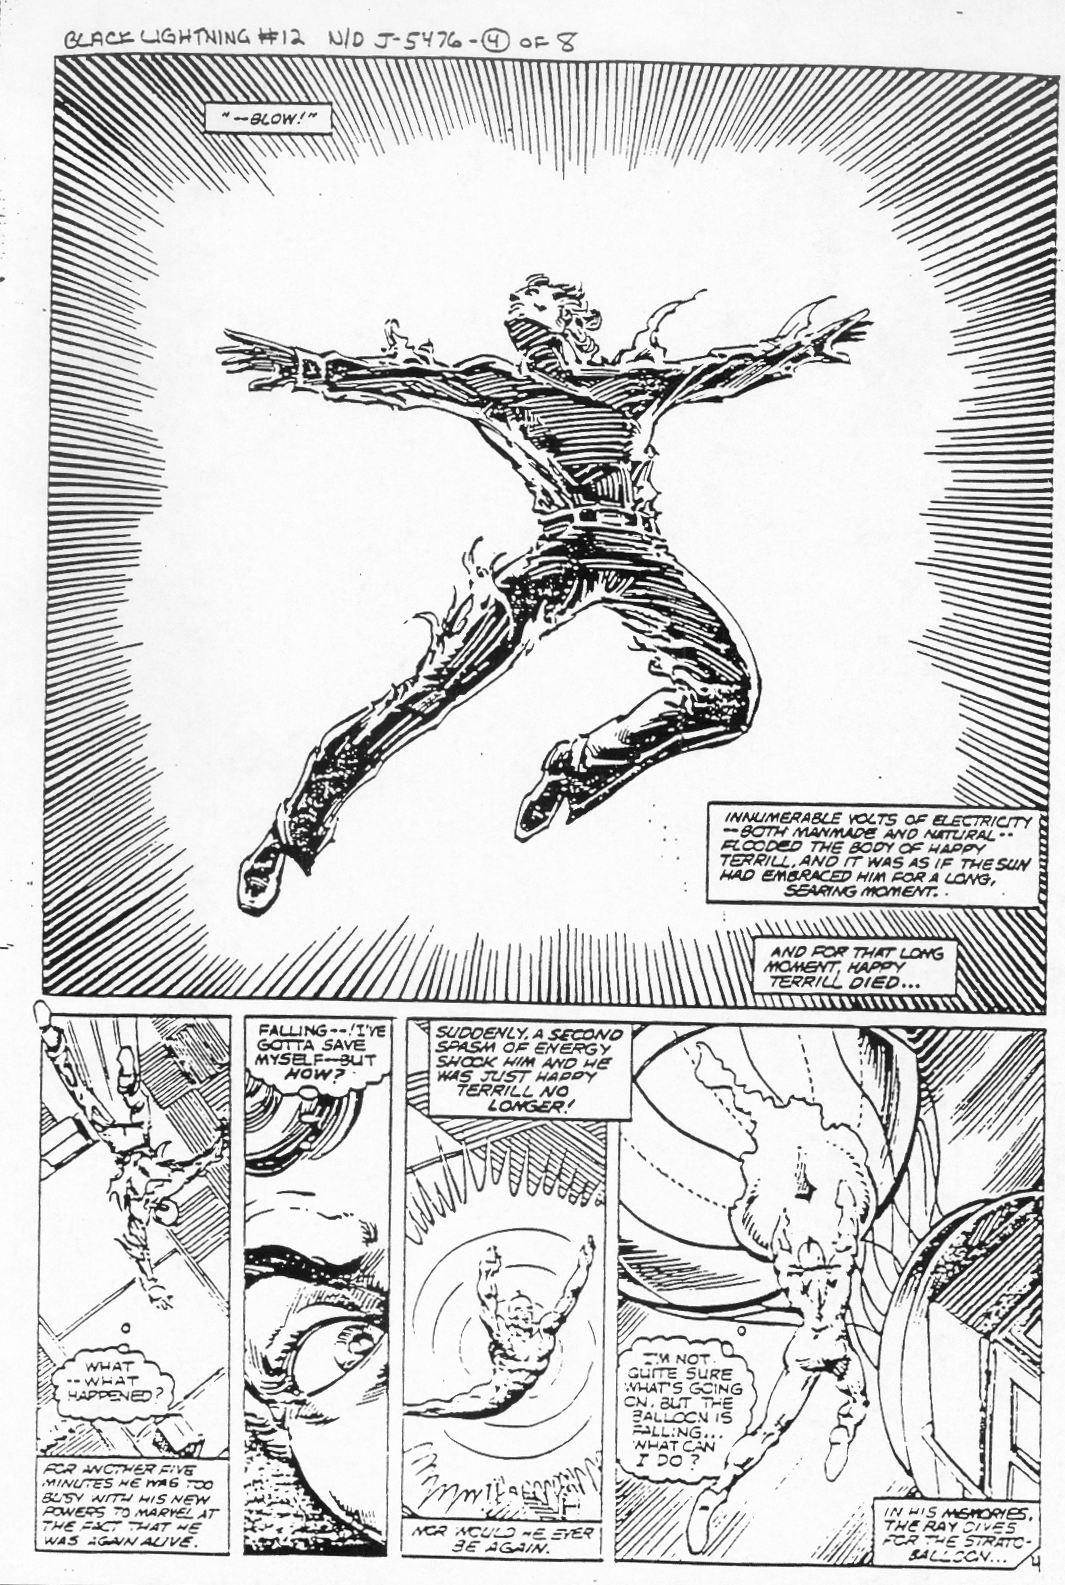 Read online Black Lightning comic -  Issue #12 - 22